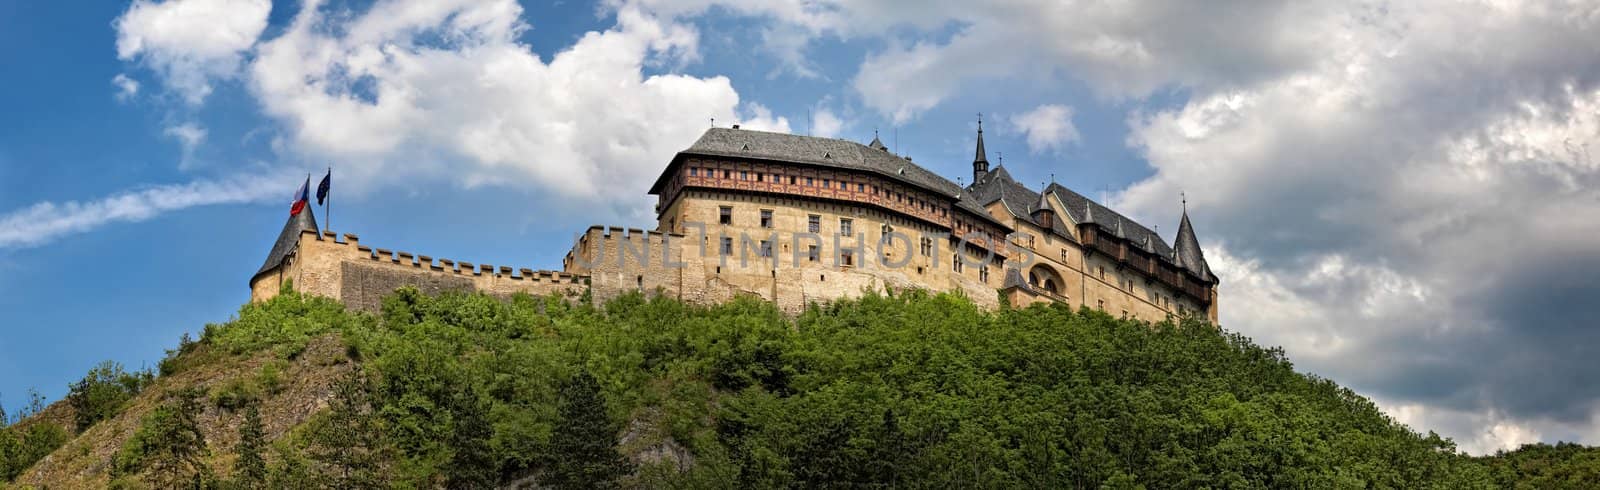 panorama of royal castle Karlstejn, Czech Republic